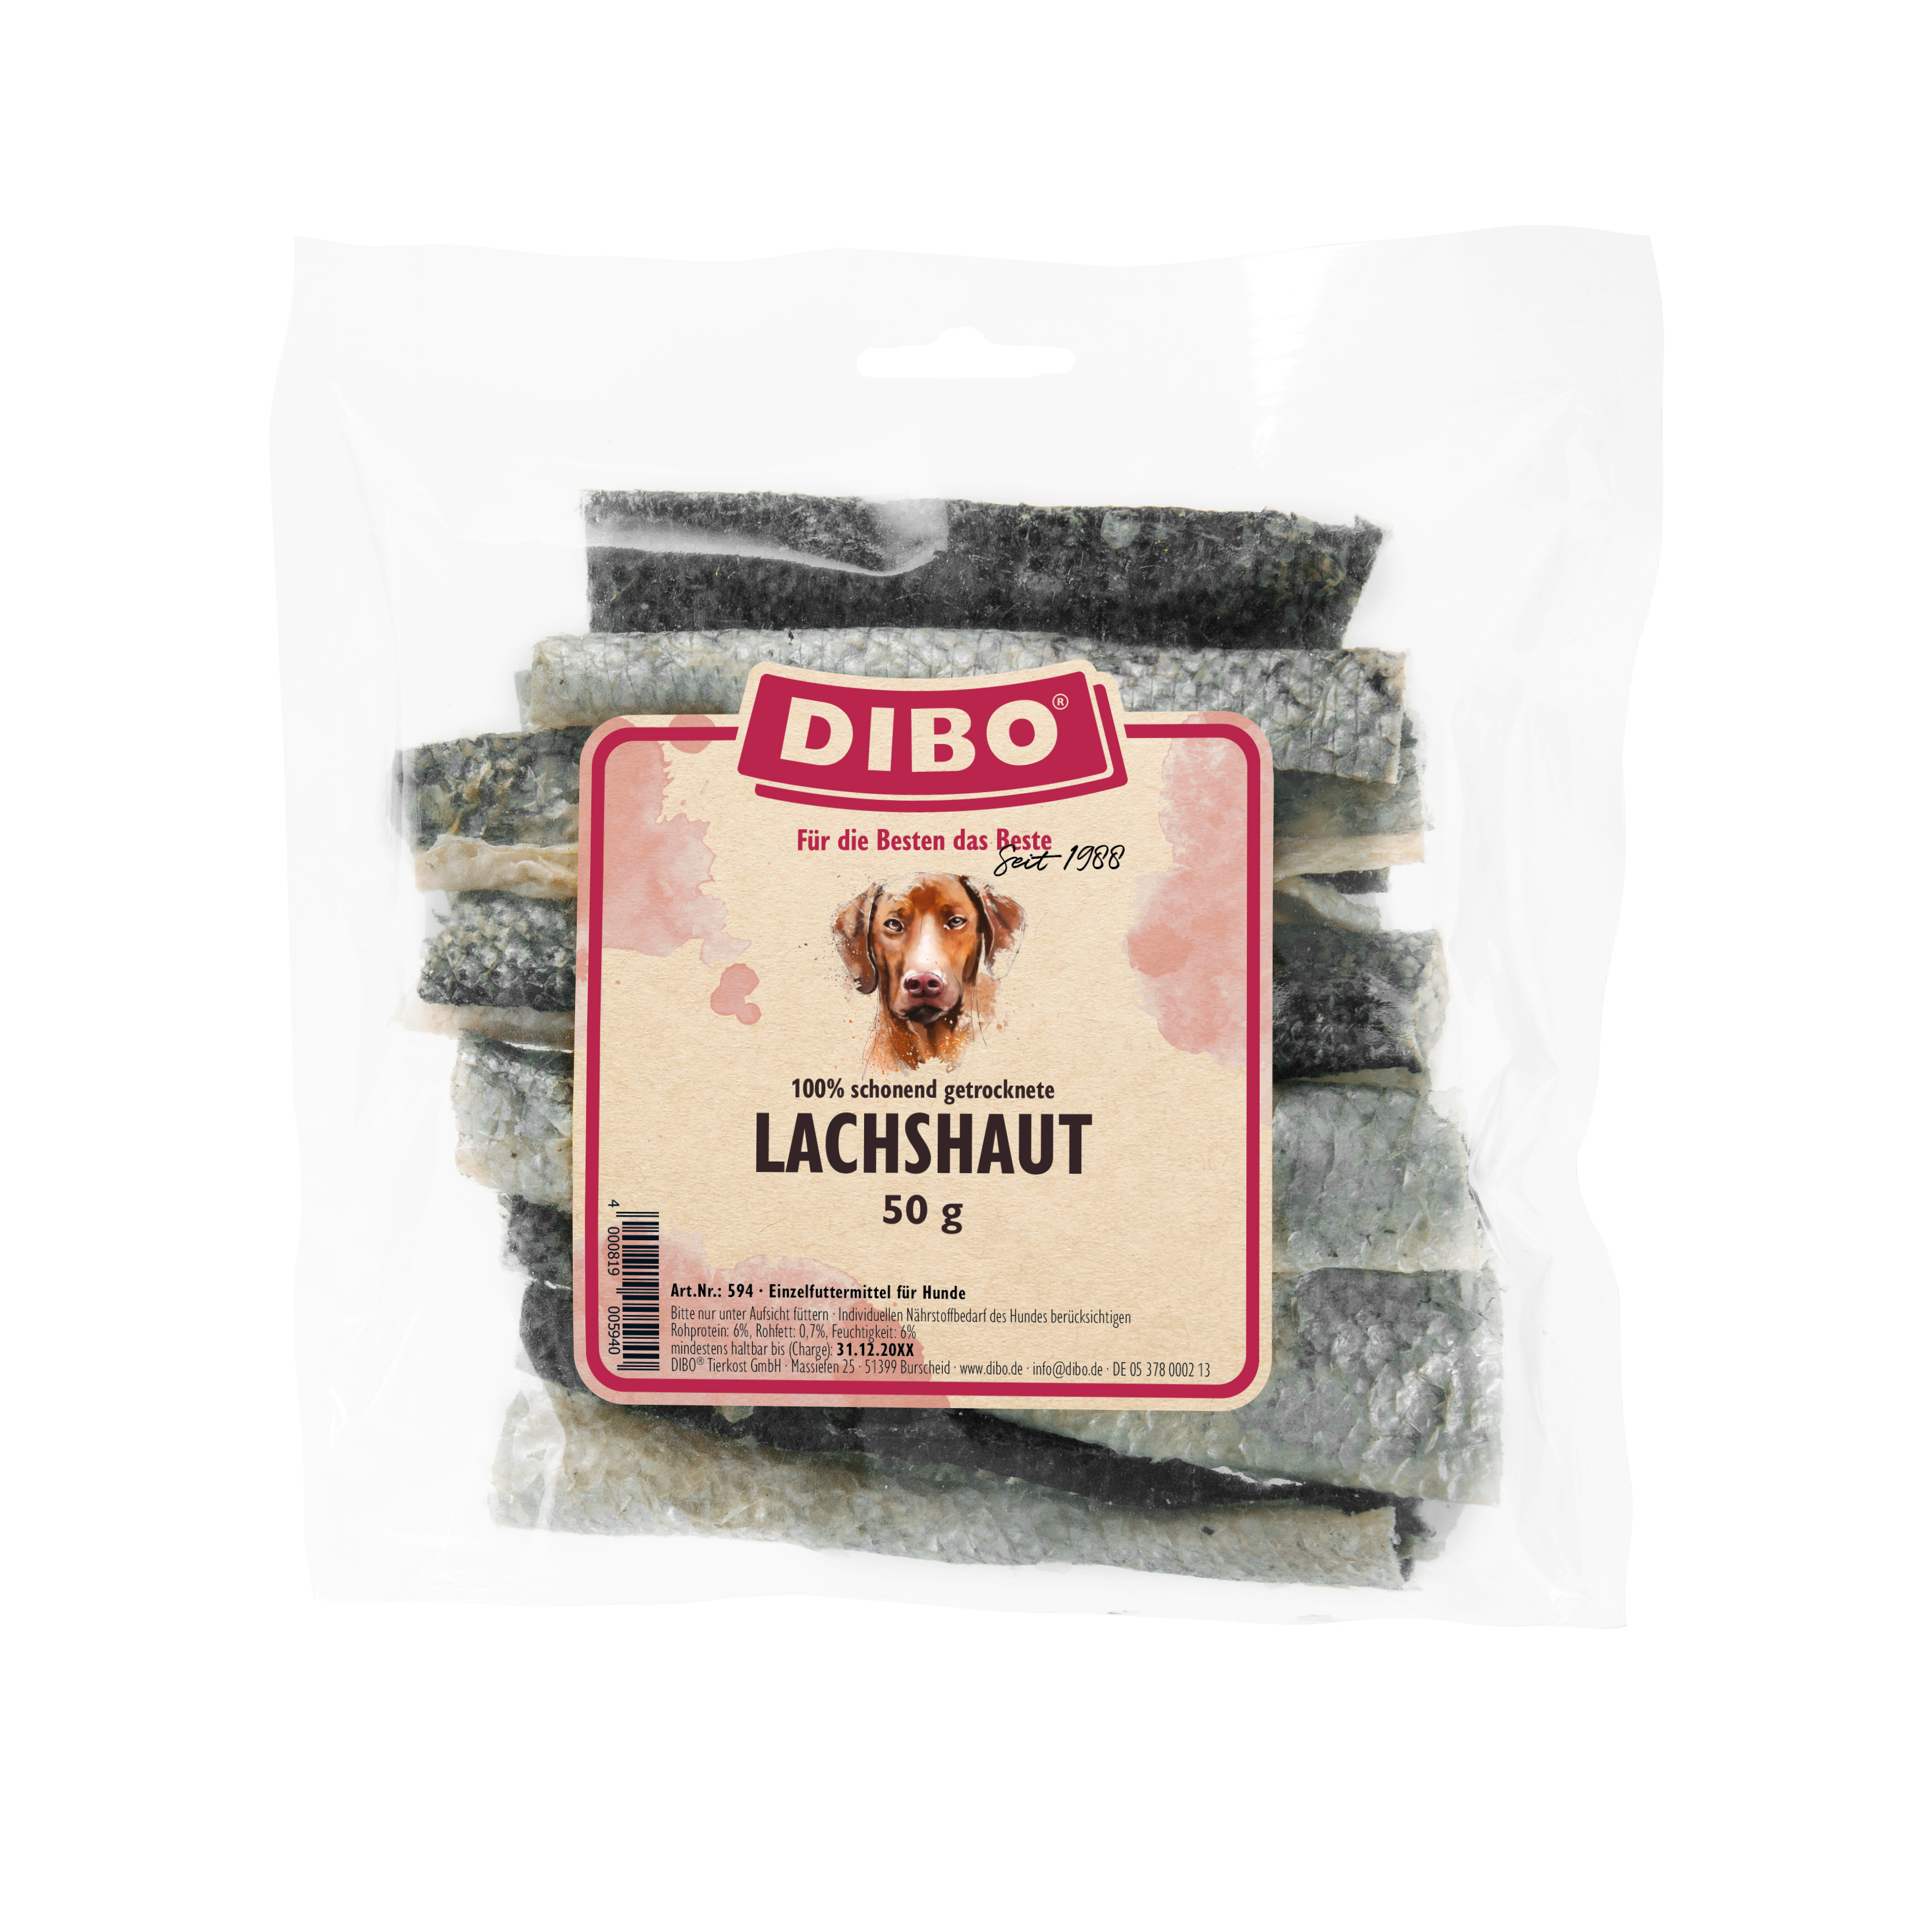 DIBO Lachshaut, 50g-Beutel